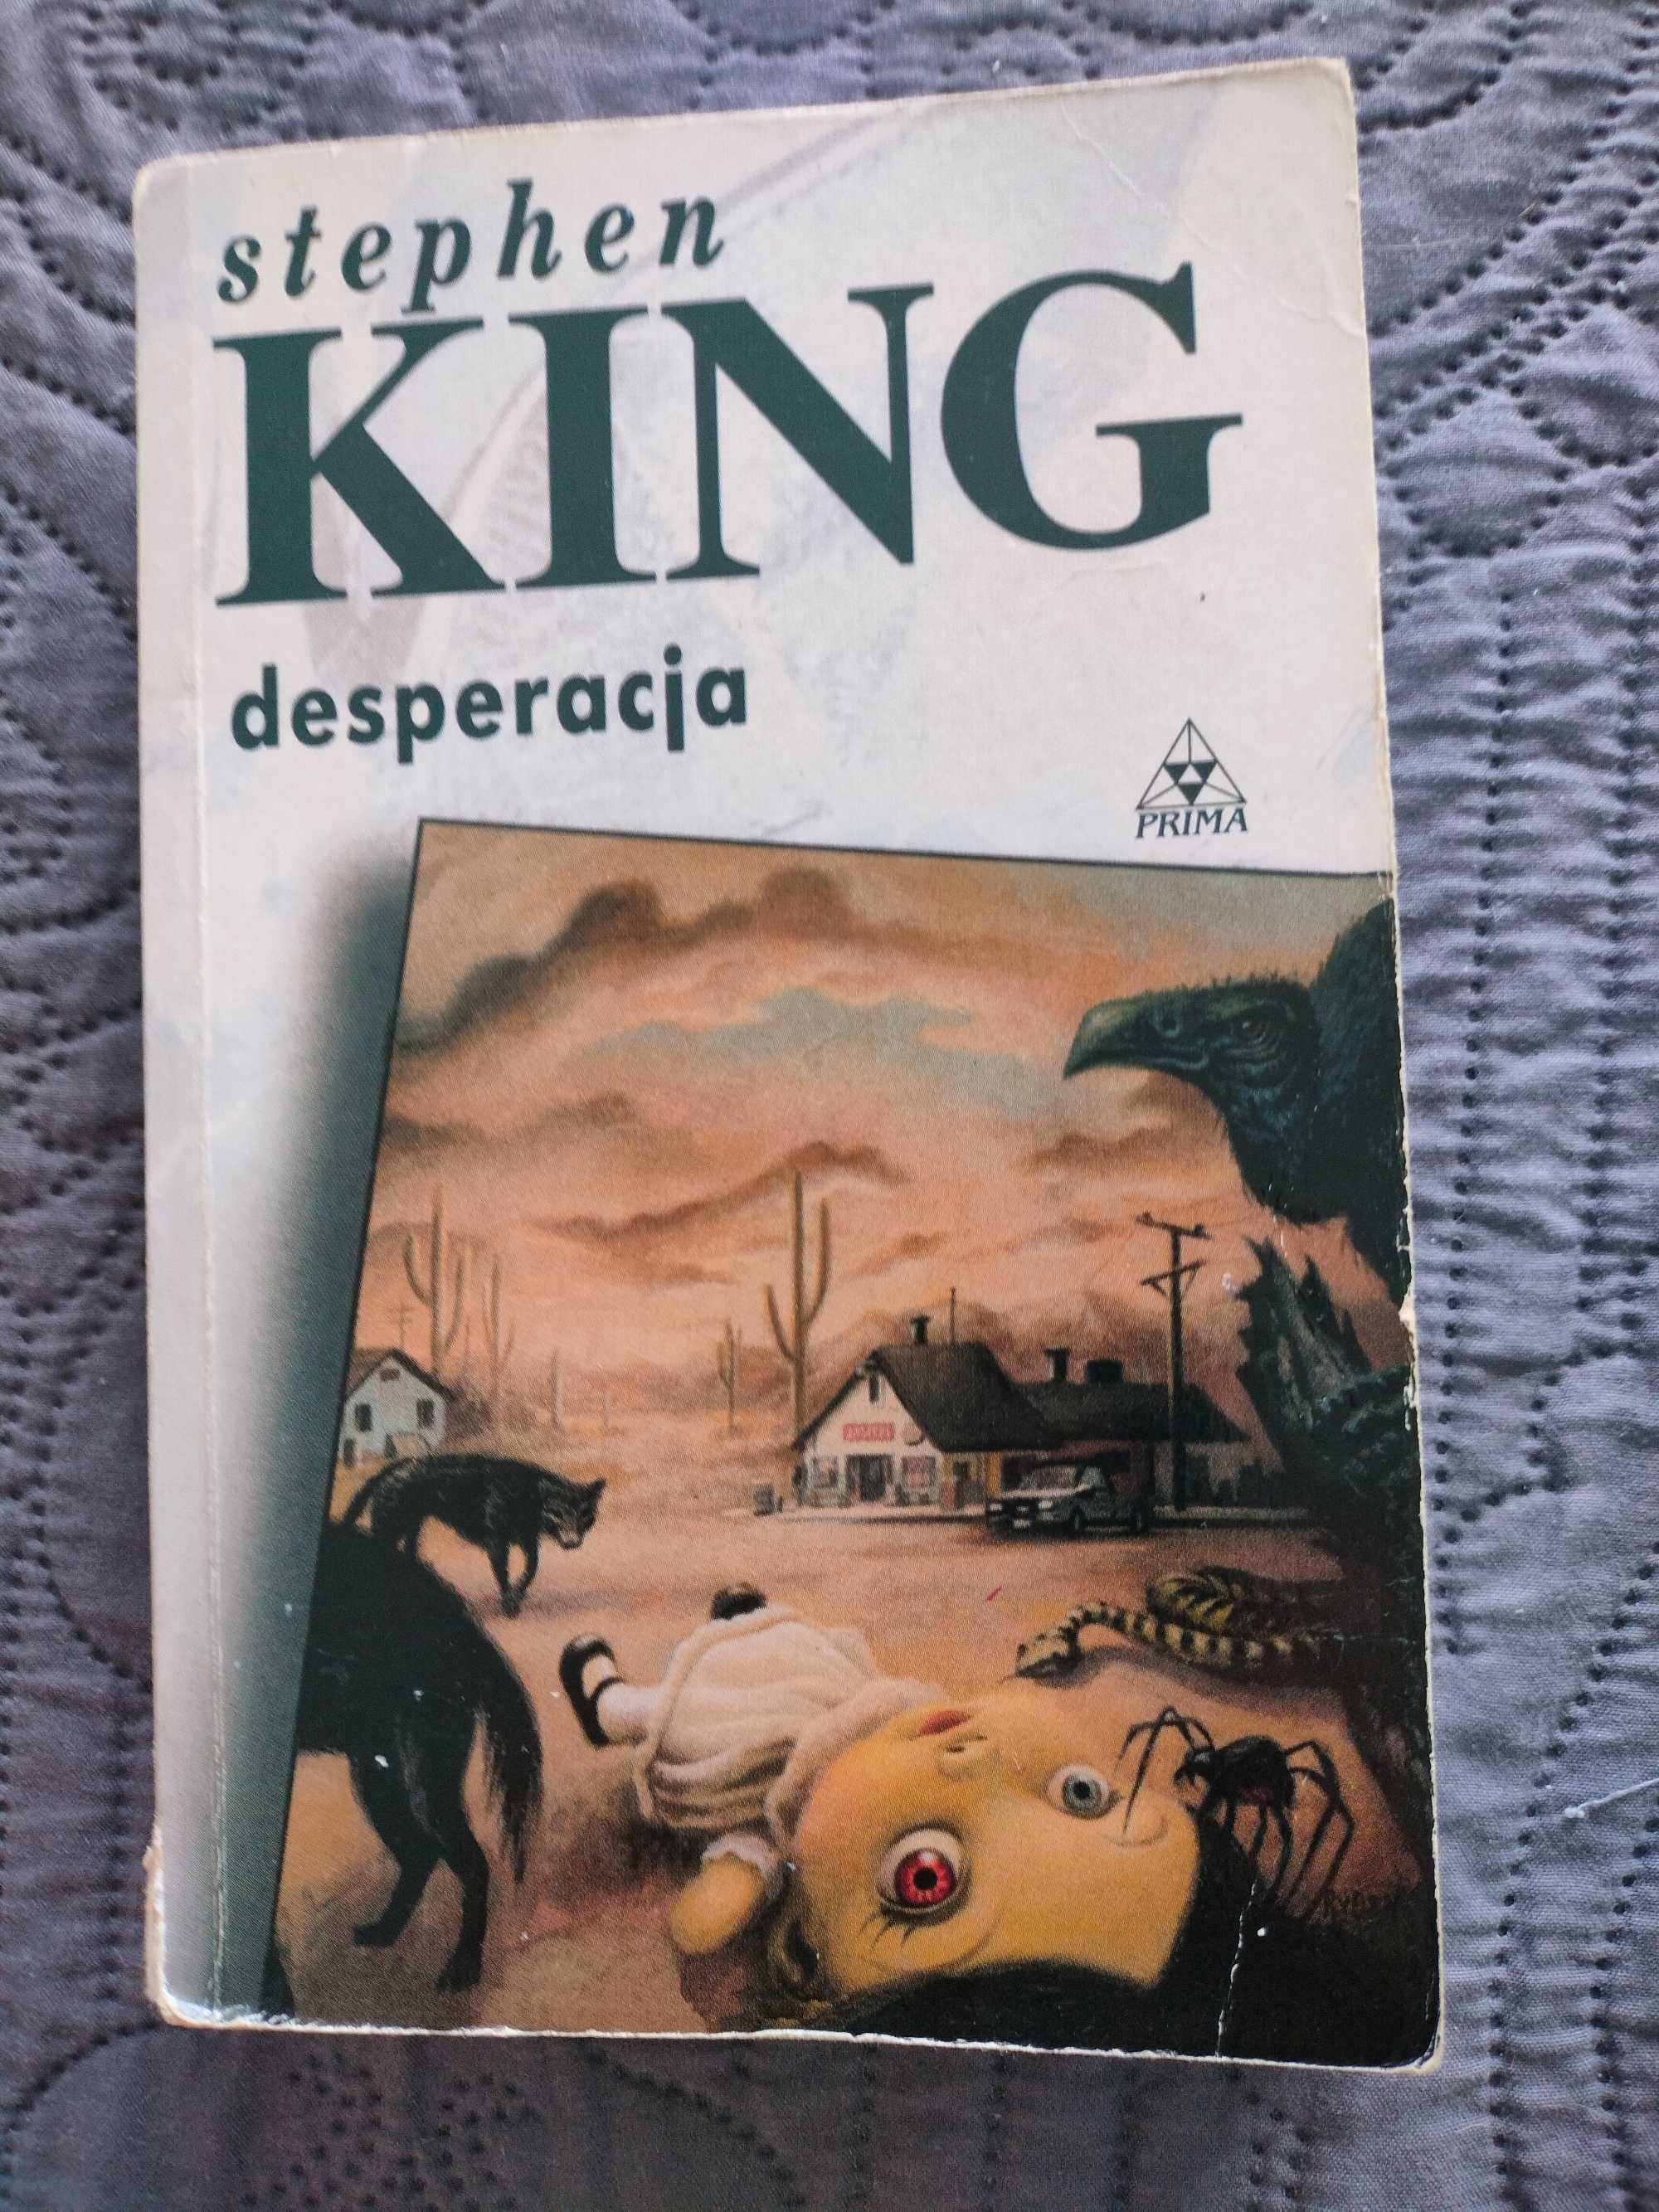 Książka "Desperacja"